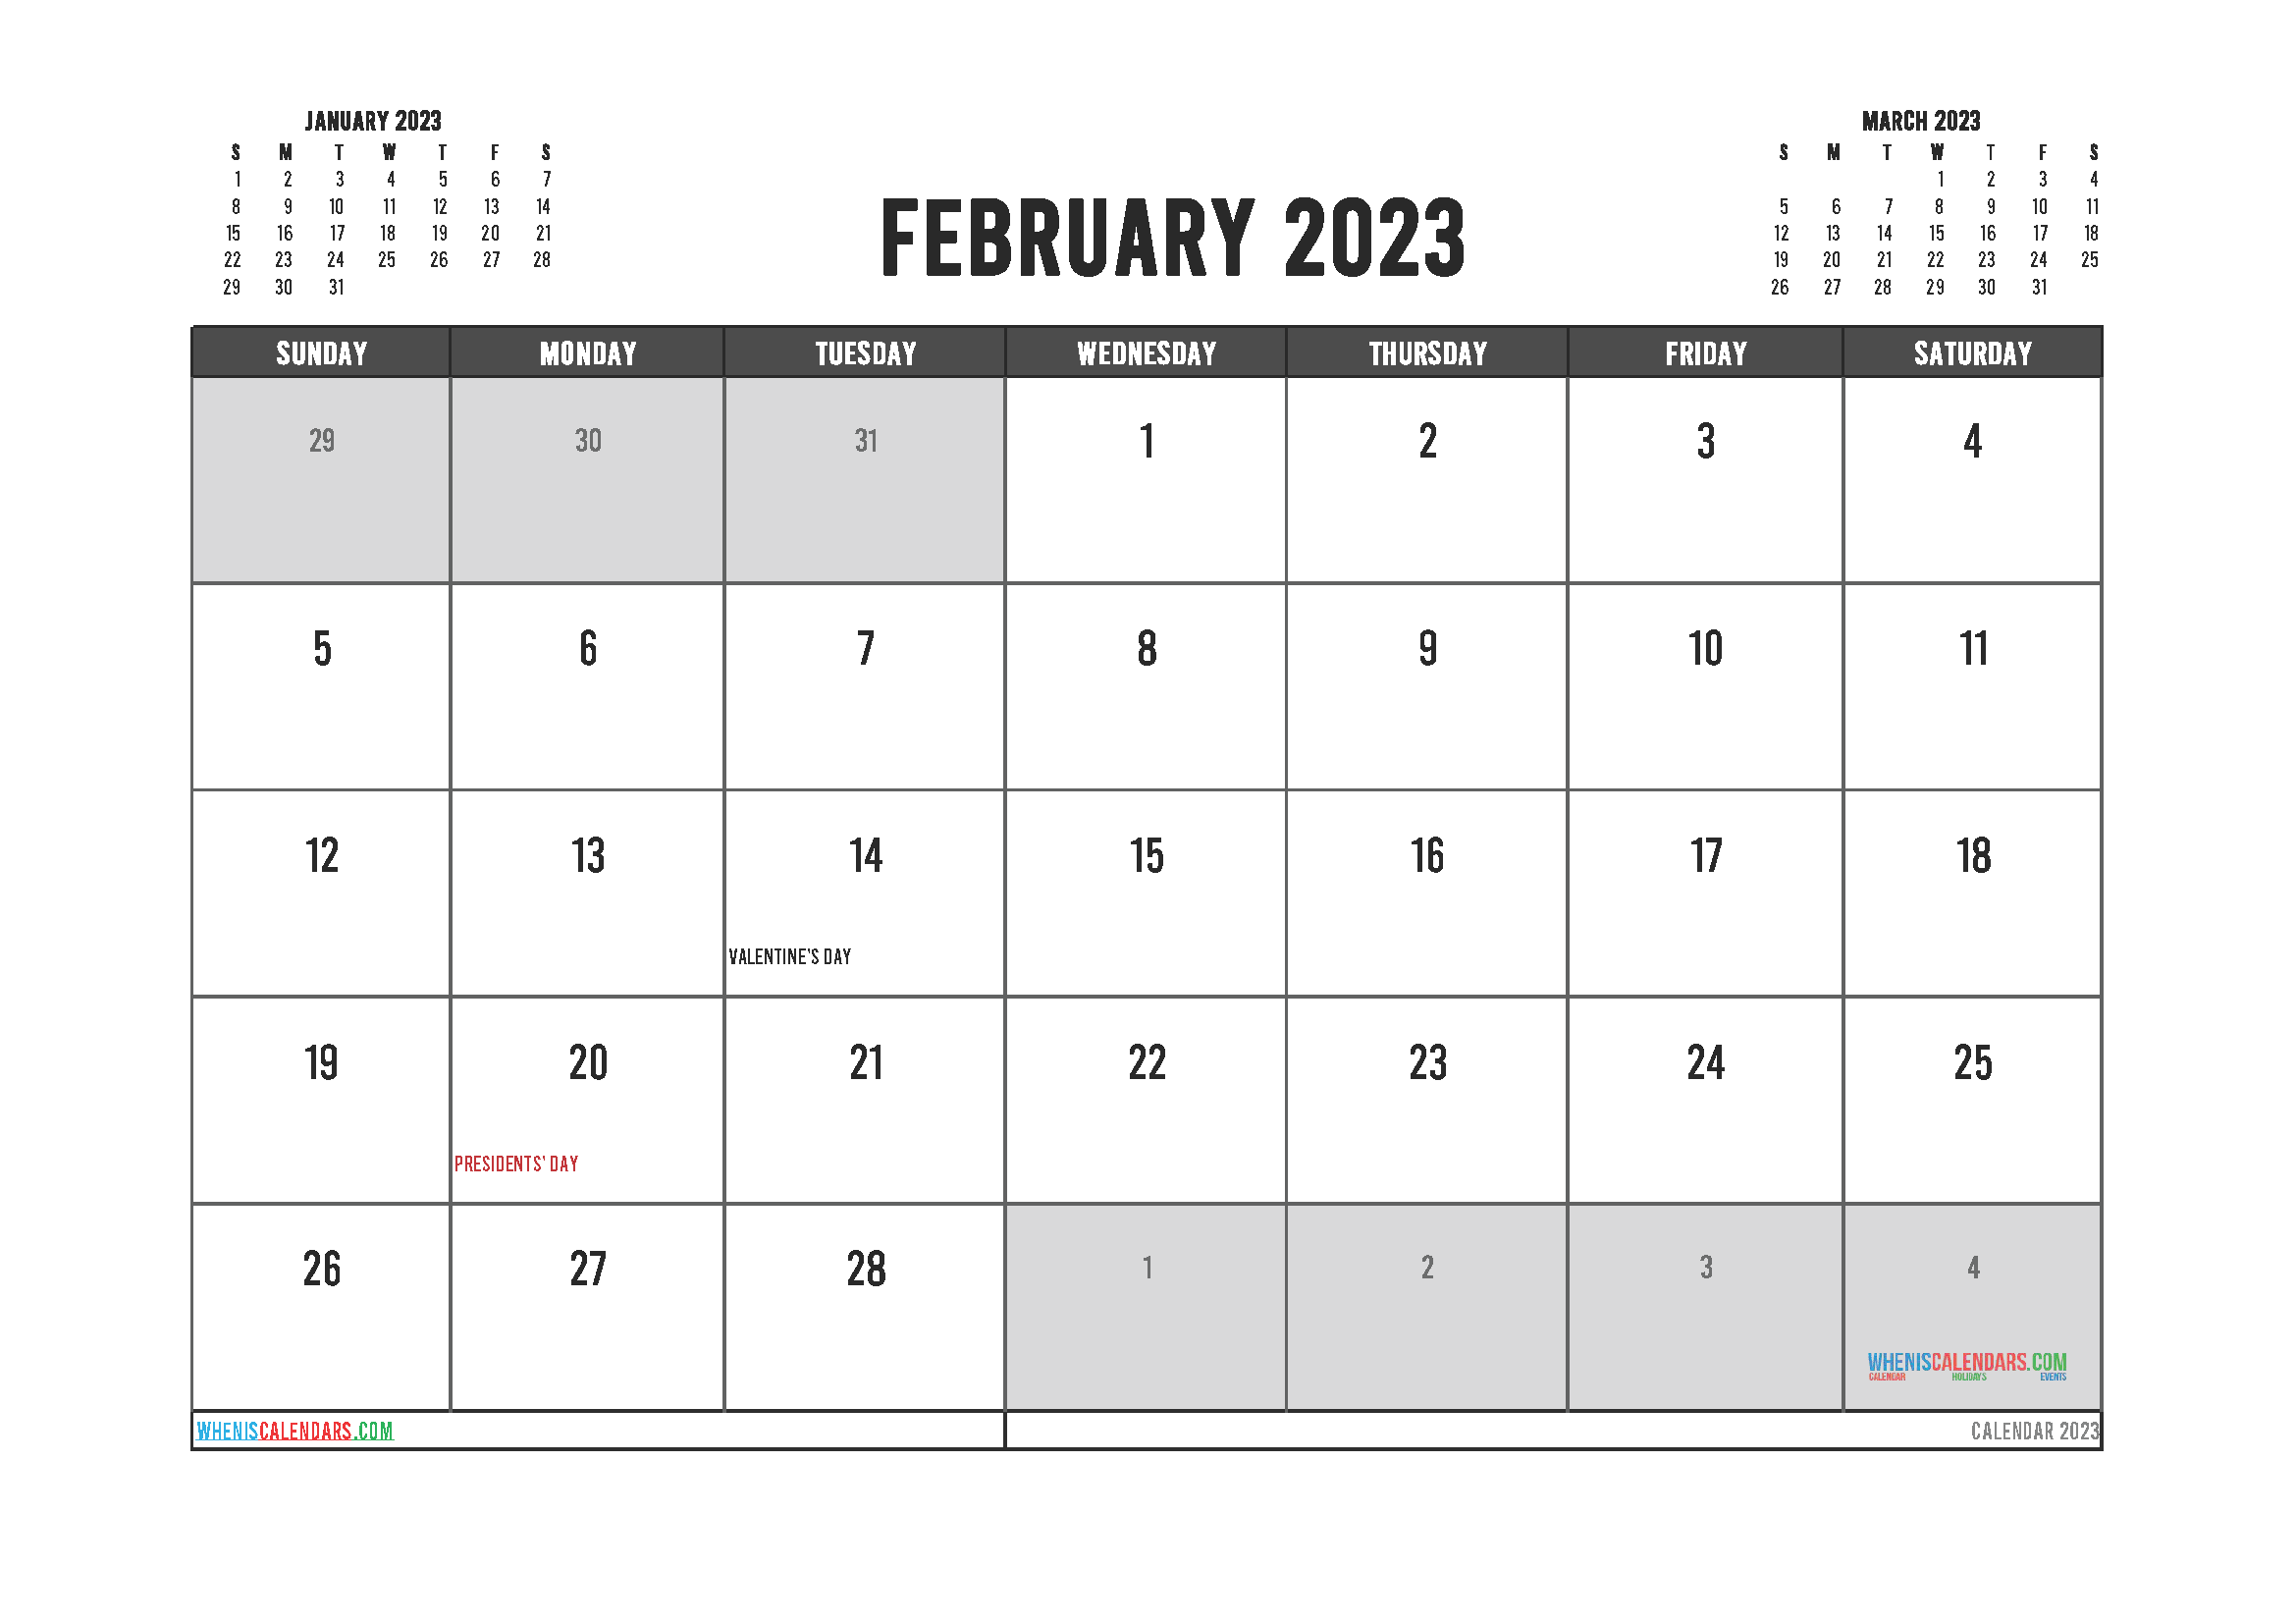 February 2023 Free Calendar Printable